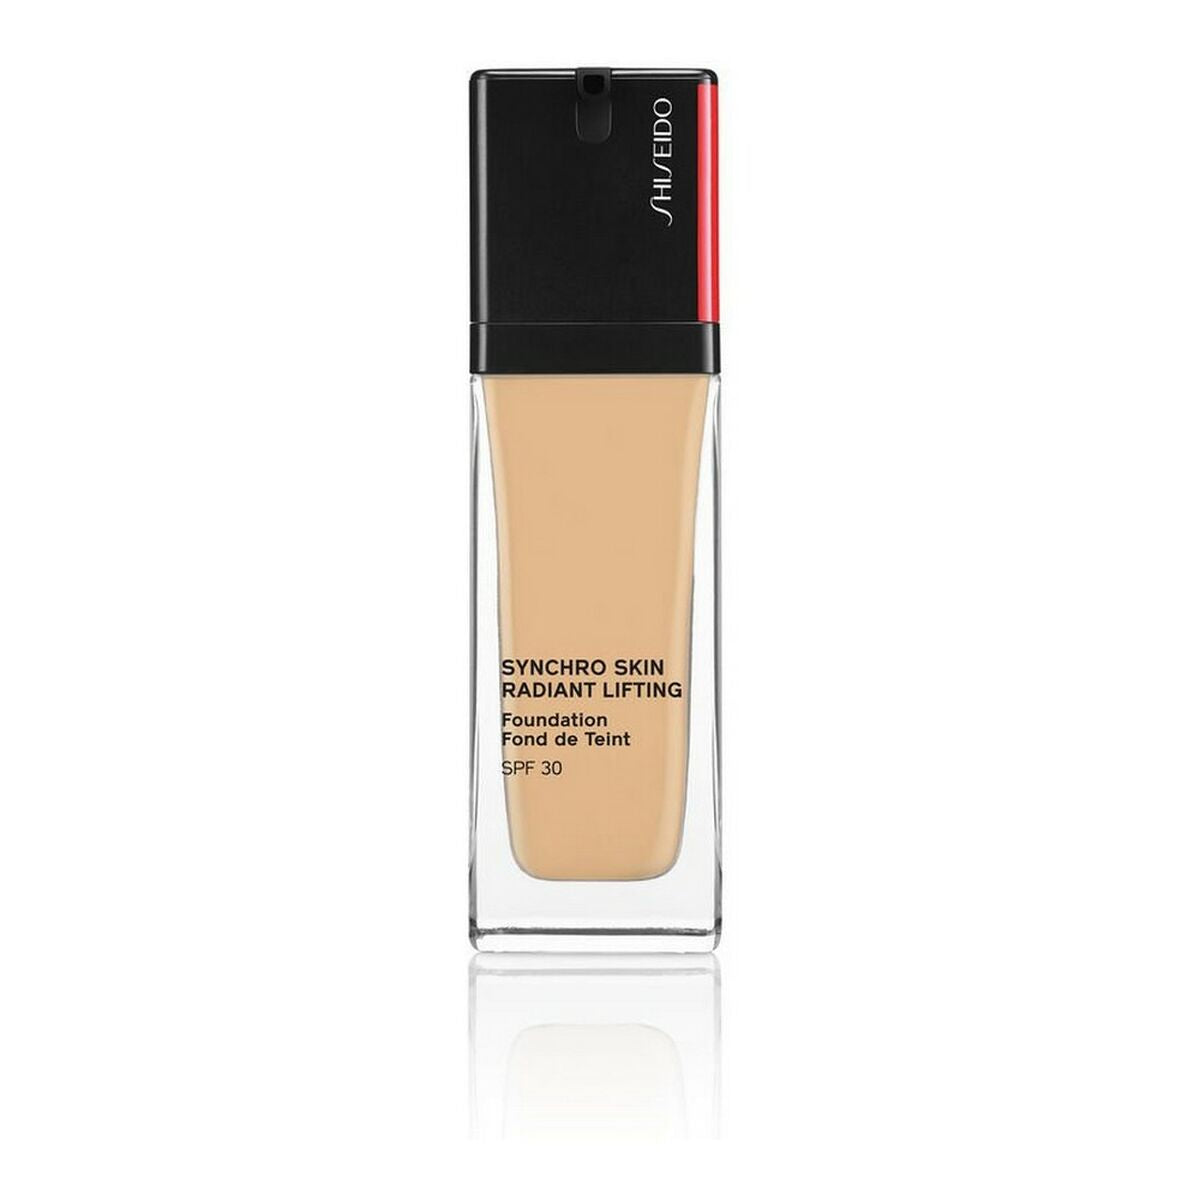 Liquide maquillage de base synchro peau shiseido 30 ml